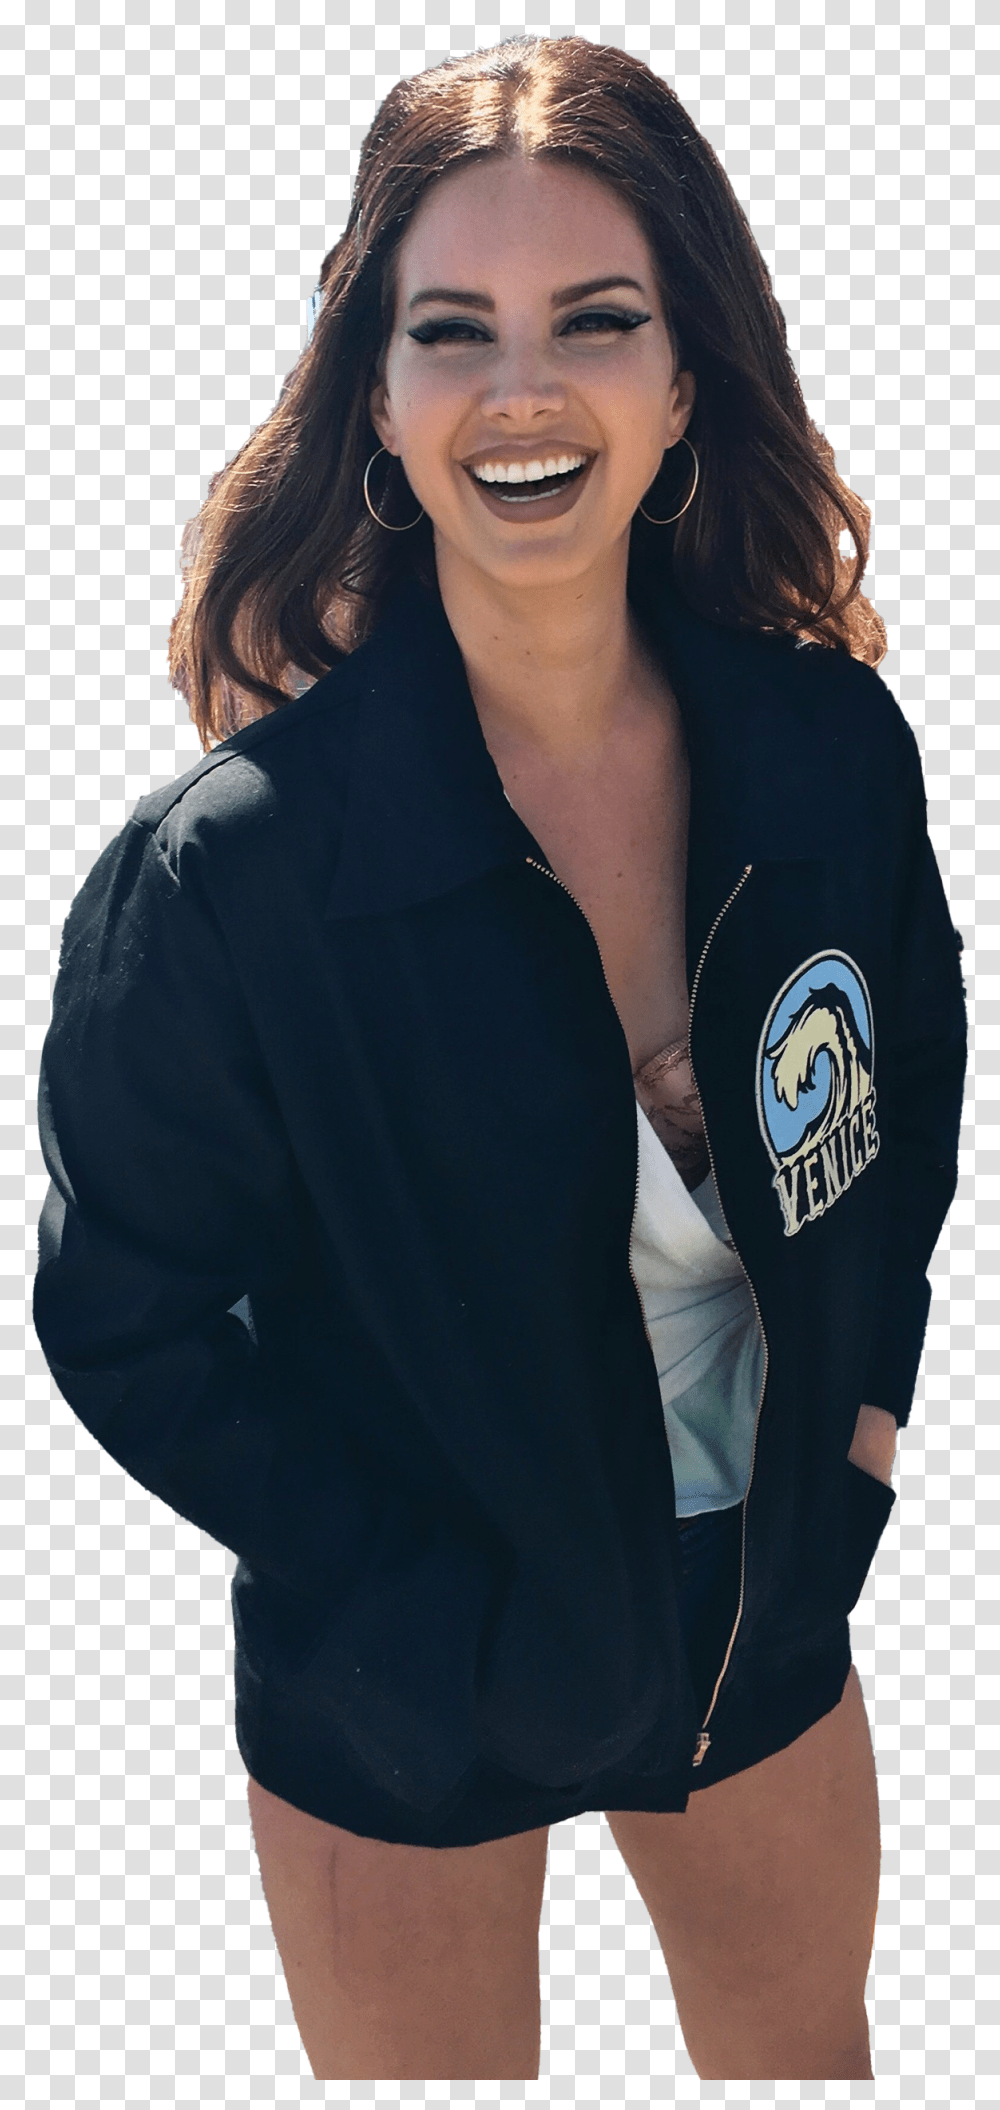 Lana Del Rey Image Lana Del Rey 2019 Smile, Sleeve, Person, Jacket Transparent Png